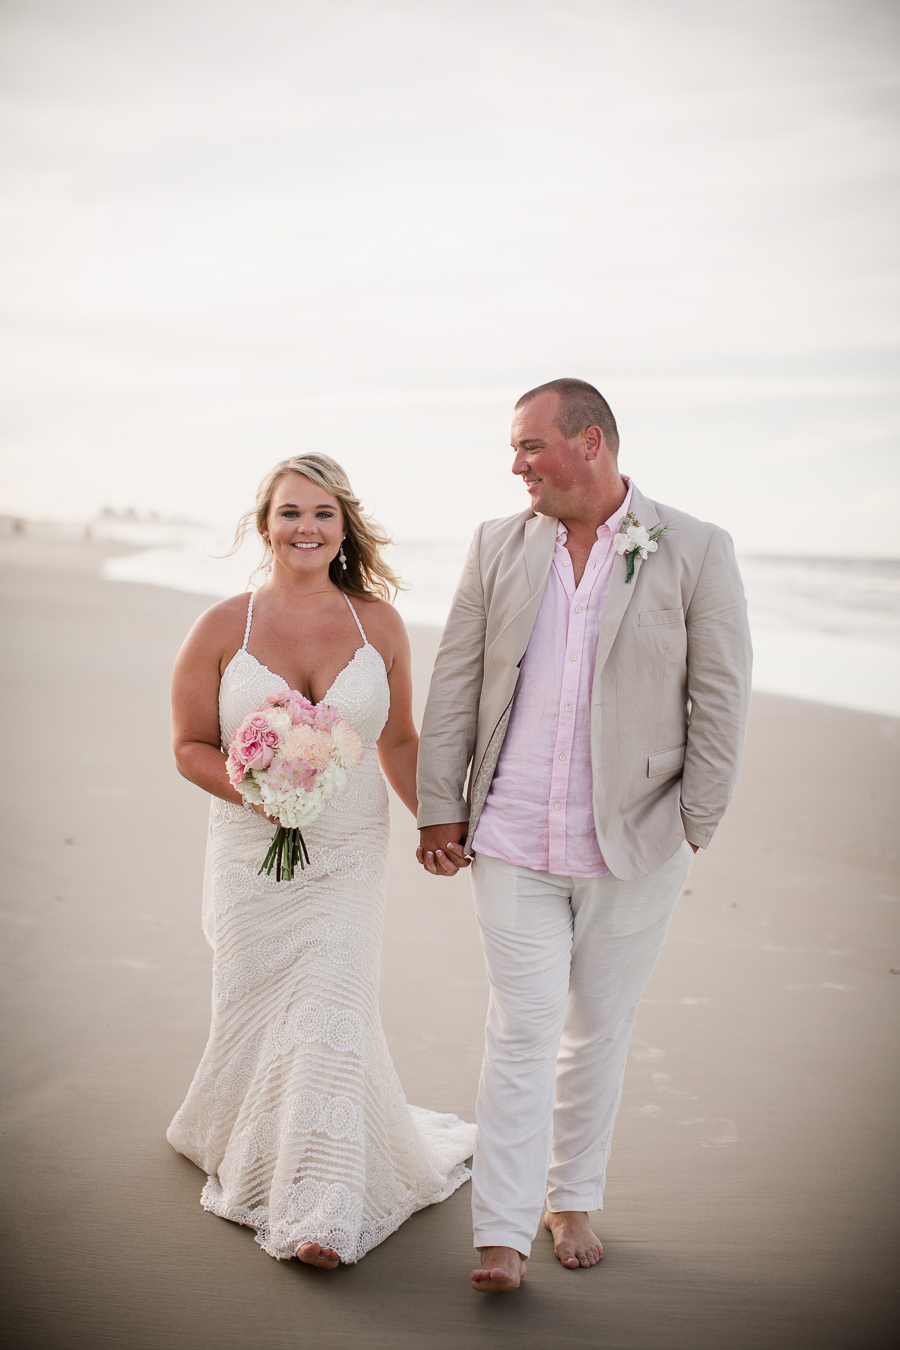 Walking in front of water at this Daytona Beach Wedding by Destination Wedding Photographer, Amanda May Photos.